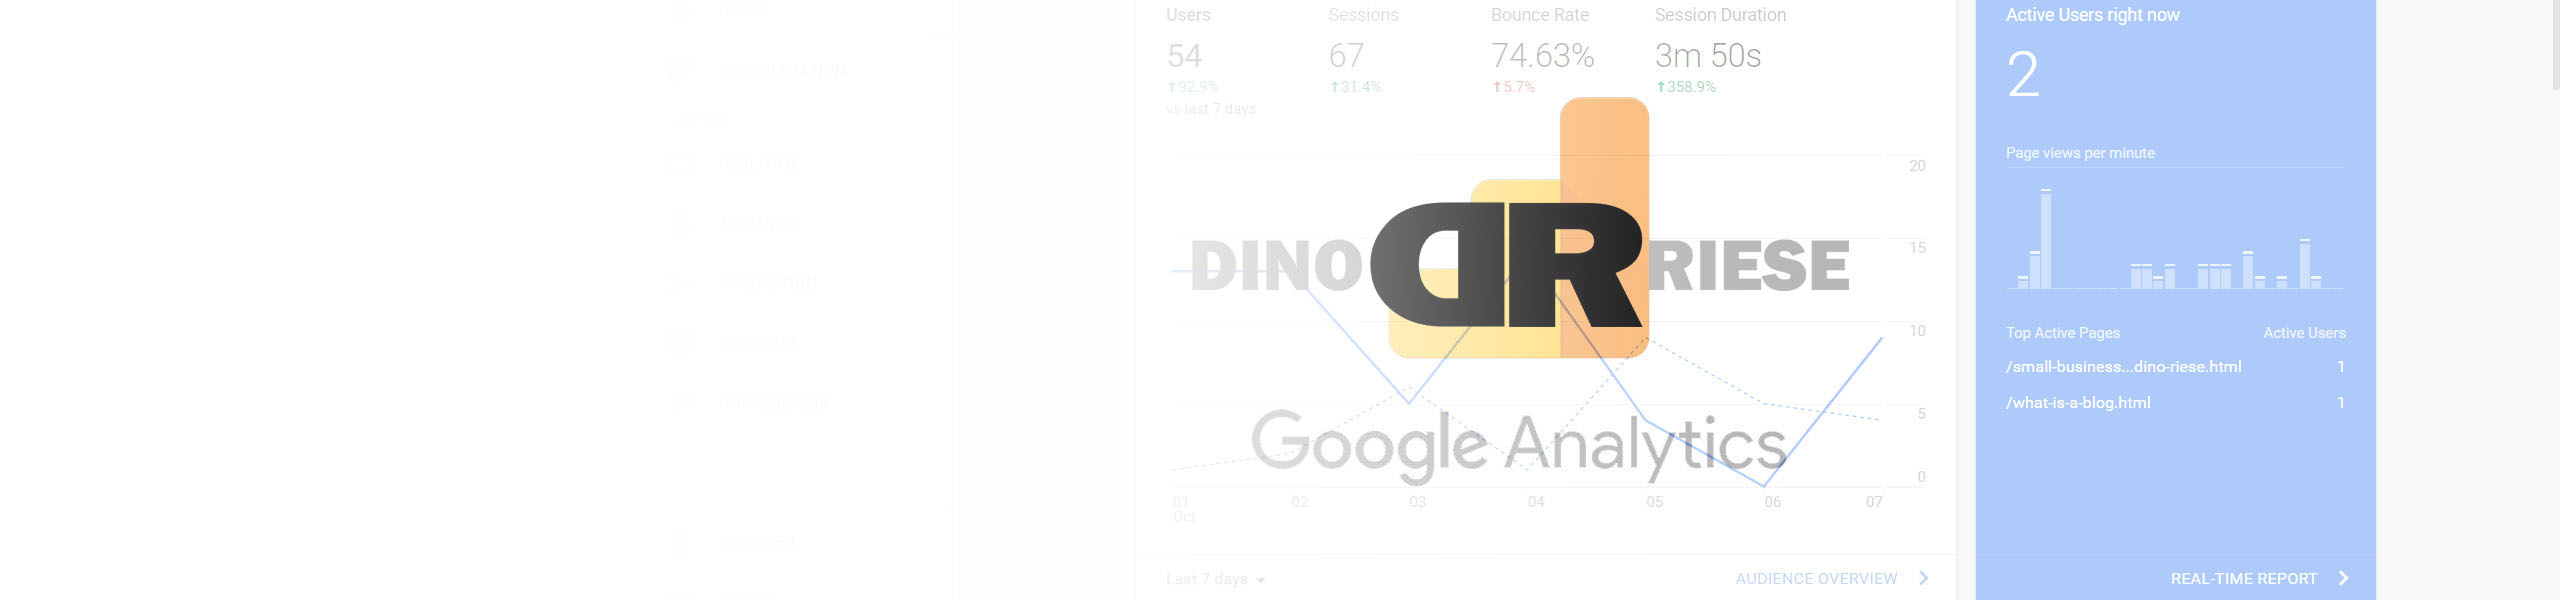 DinoRiese.com Google Analytics Service Photo | DinoRiese@gmail.com